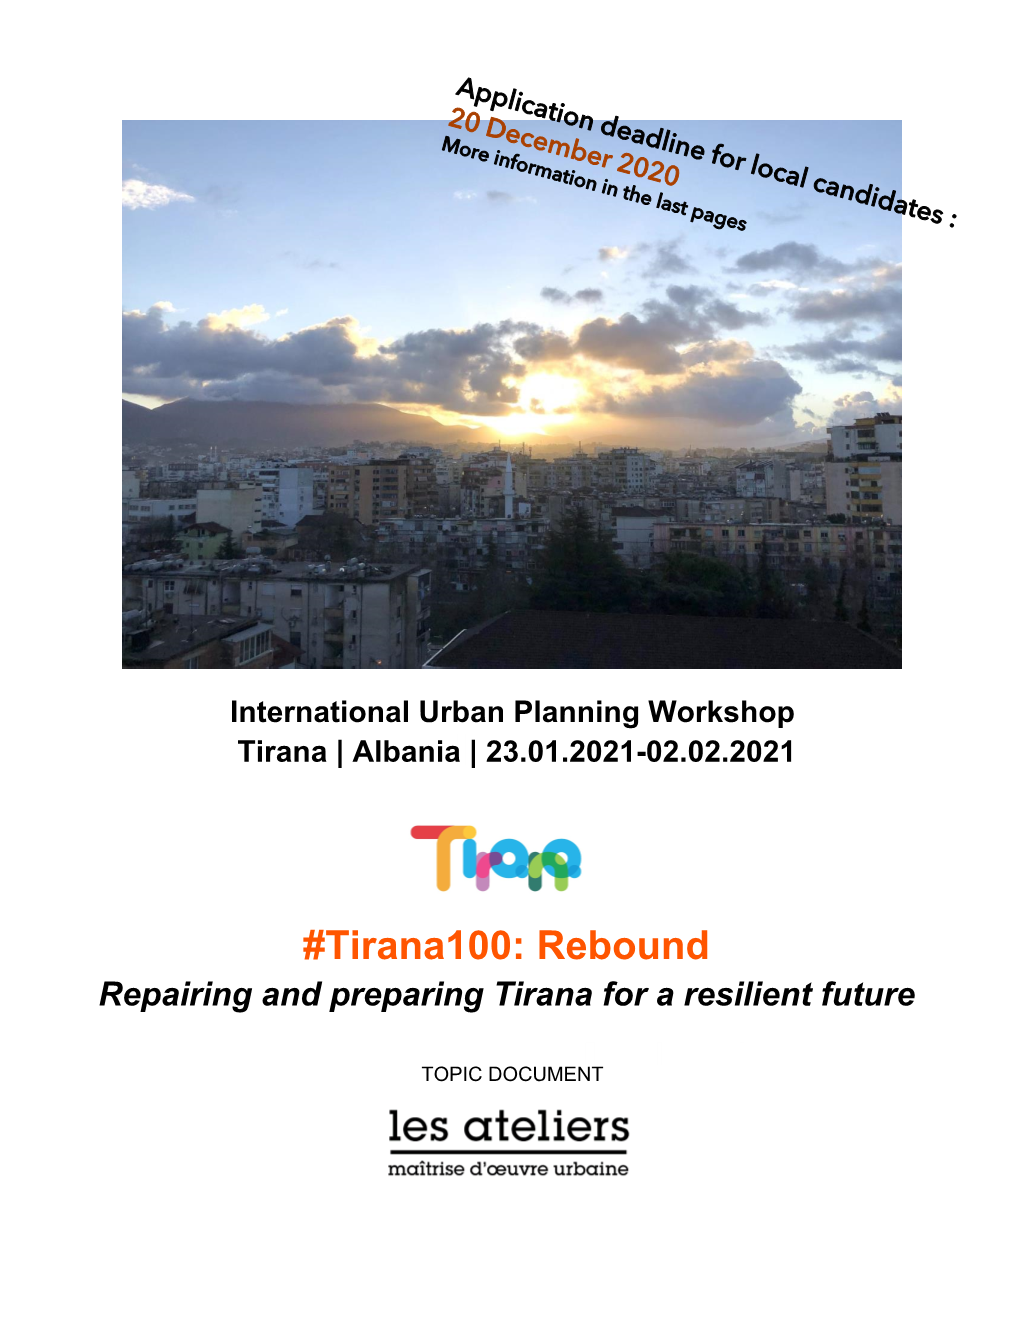 Tirana100: Rebound Repairing and Preparing Tirana for a Resilient Future